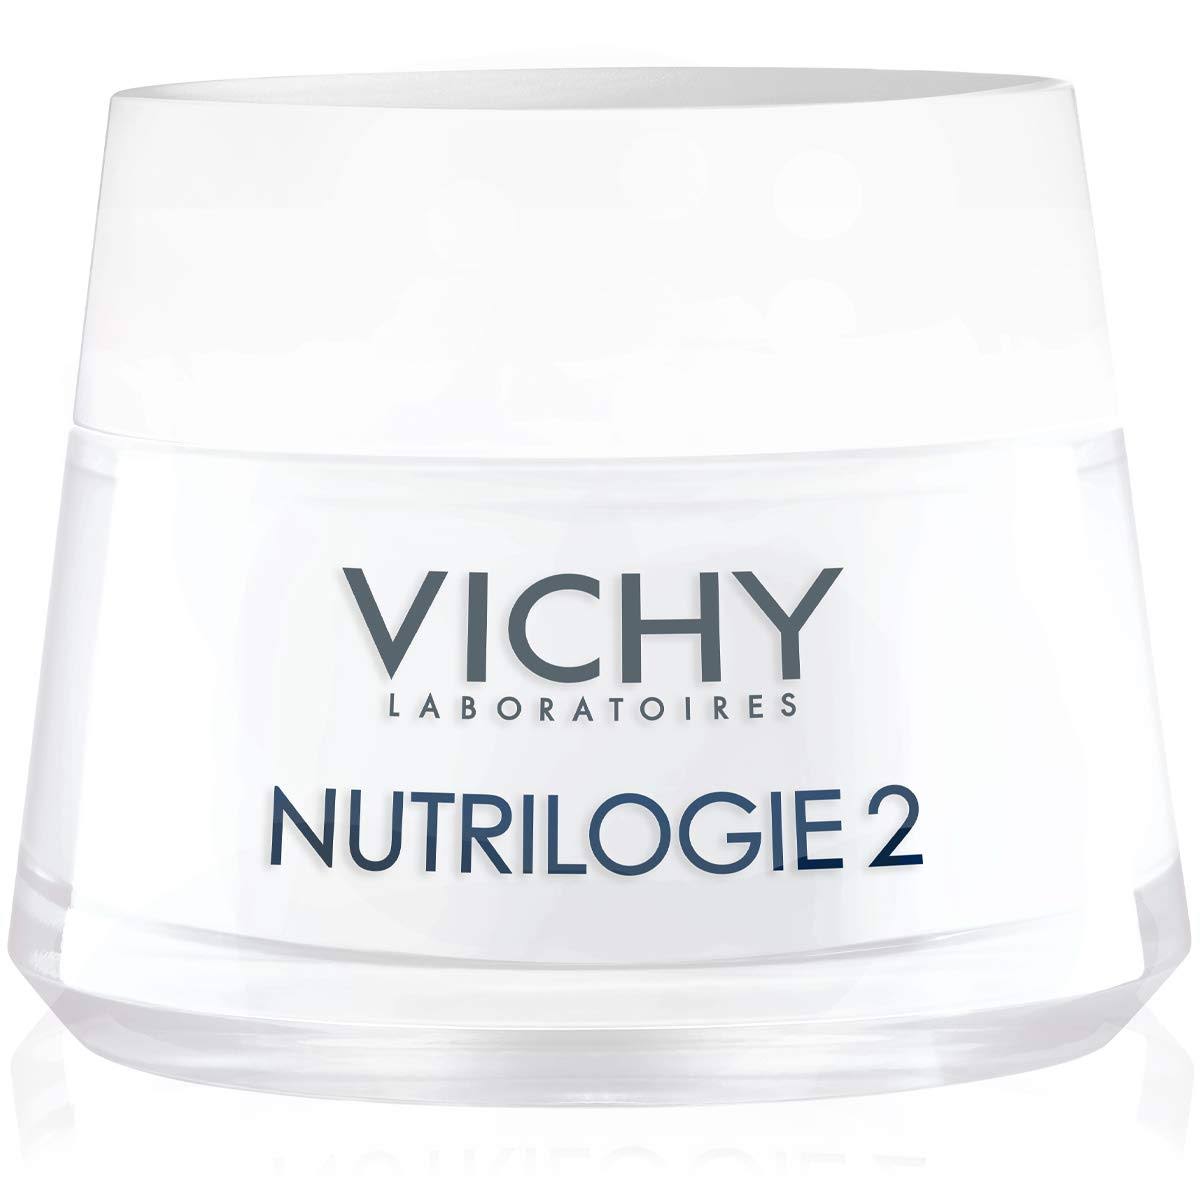 Vichy Nutrilogie 2 Intense Cream - Very Dry Skin, 50ml